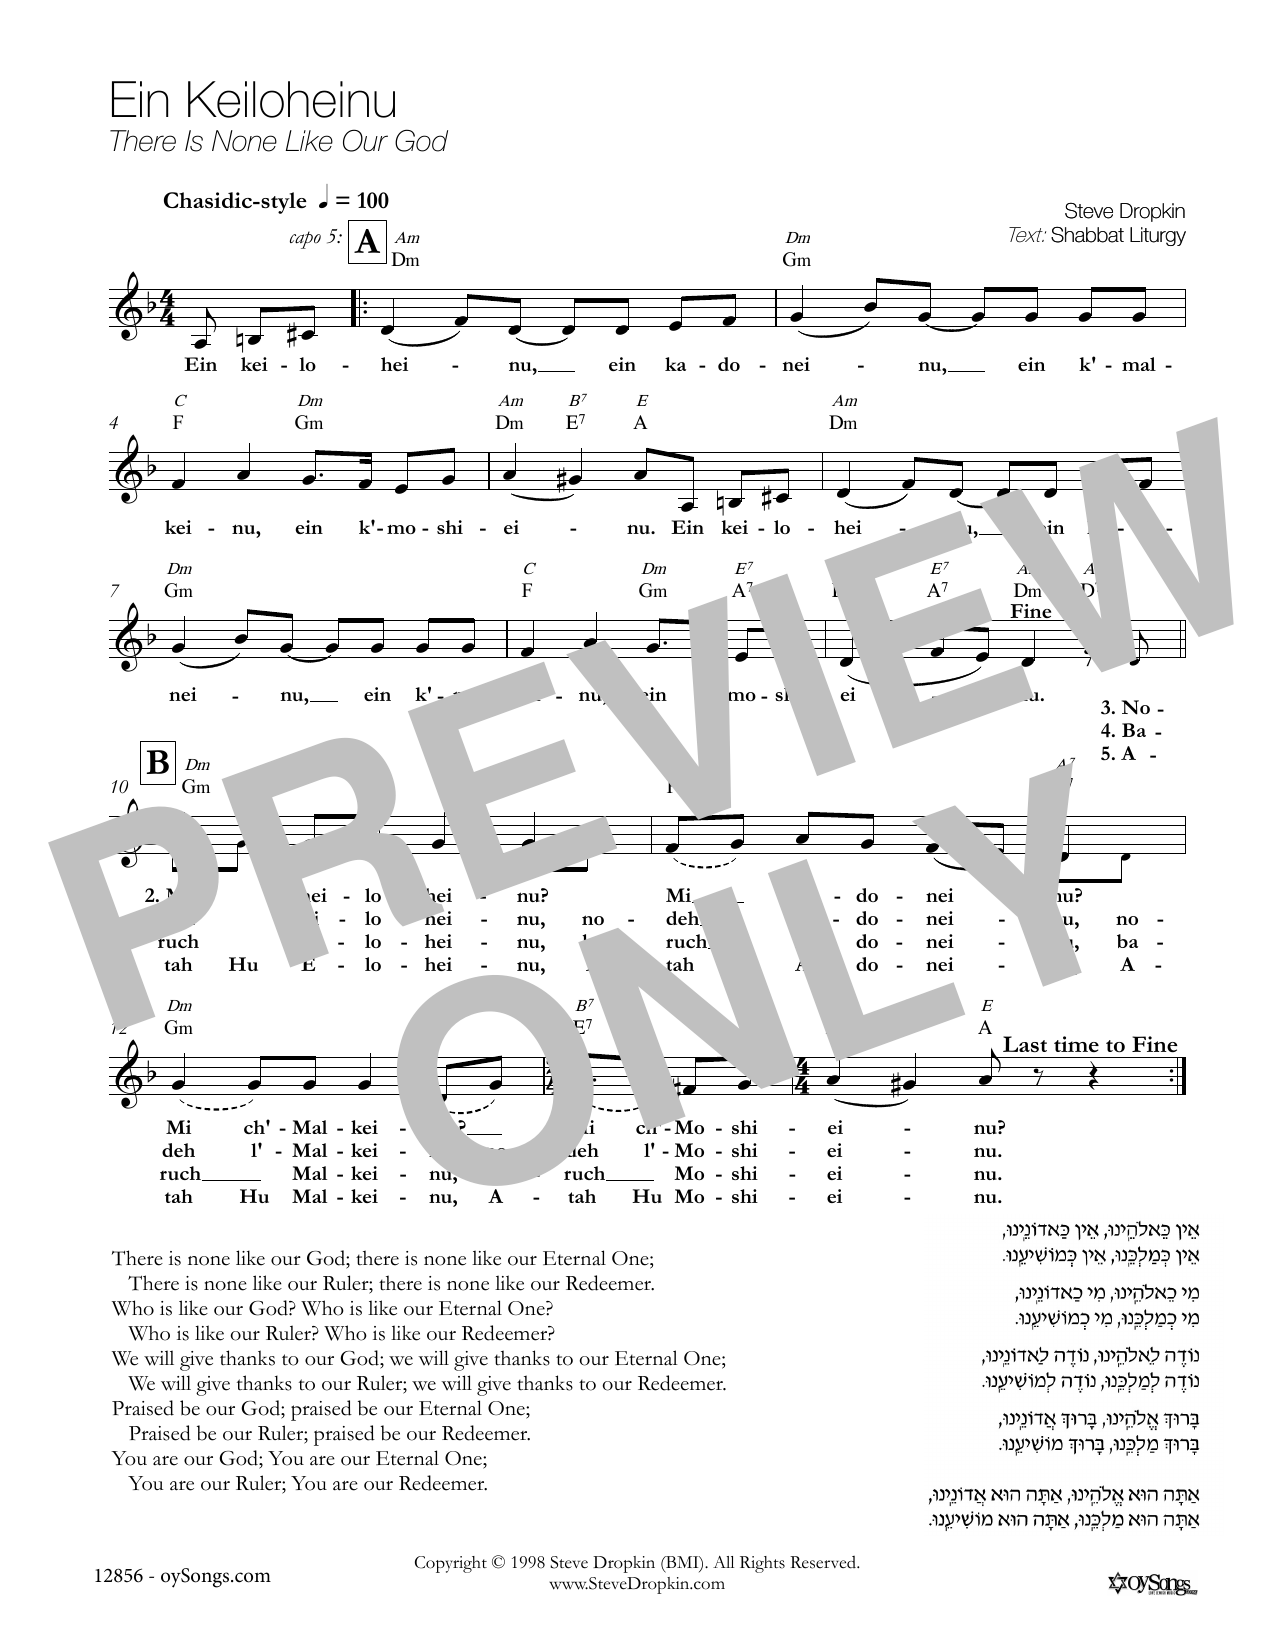 Download Steve Dropkin Ein Keiloheinu Sheet Music and learn how to play Melody Line, Lyrics & Chords PDF digital score in minutes